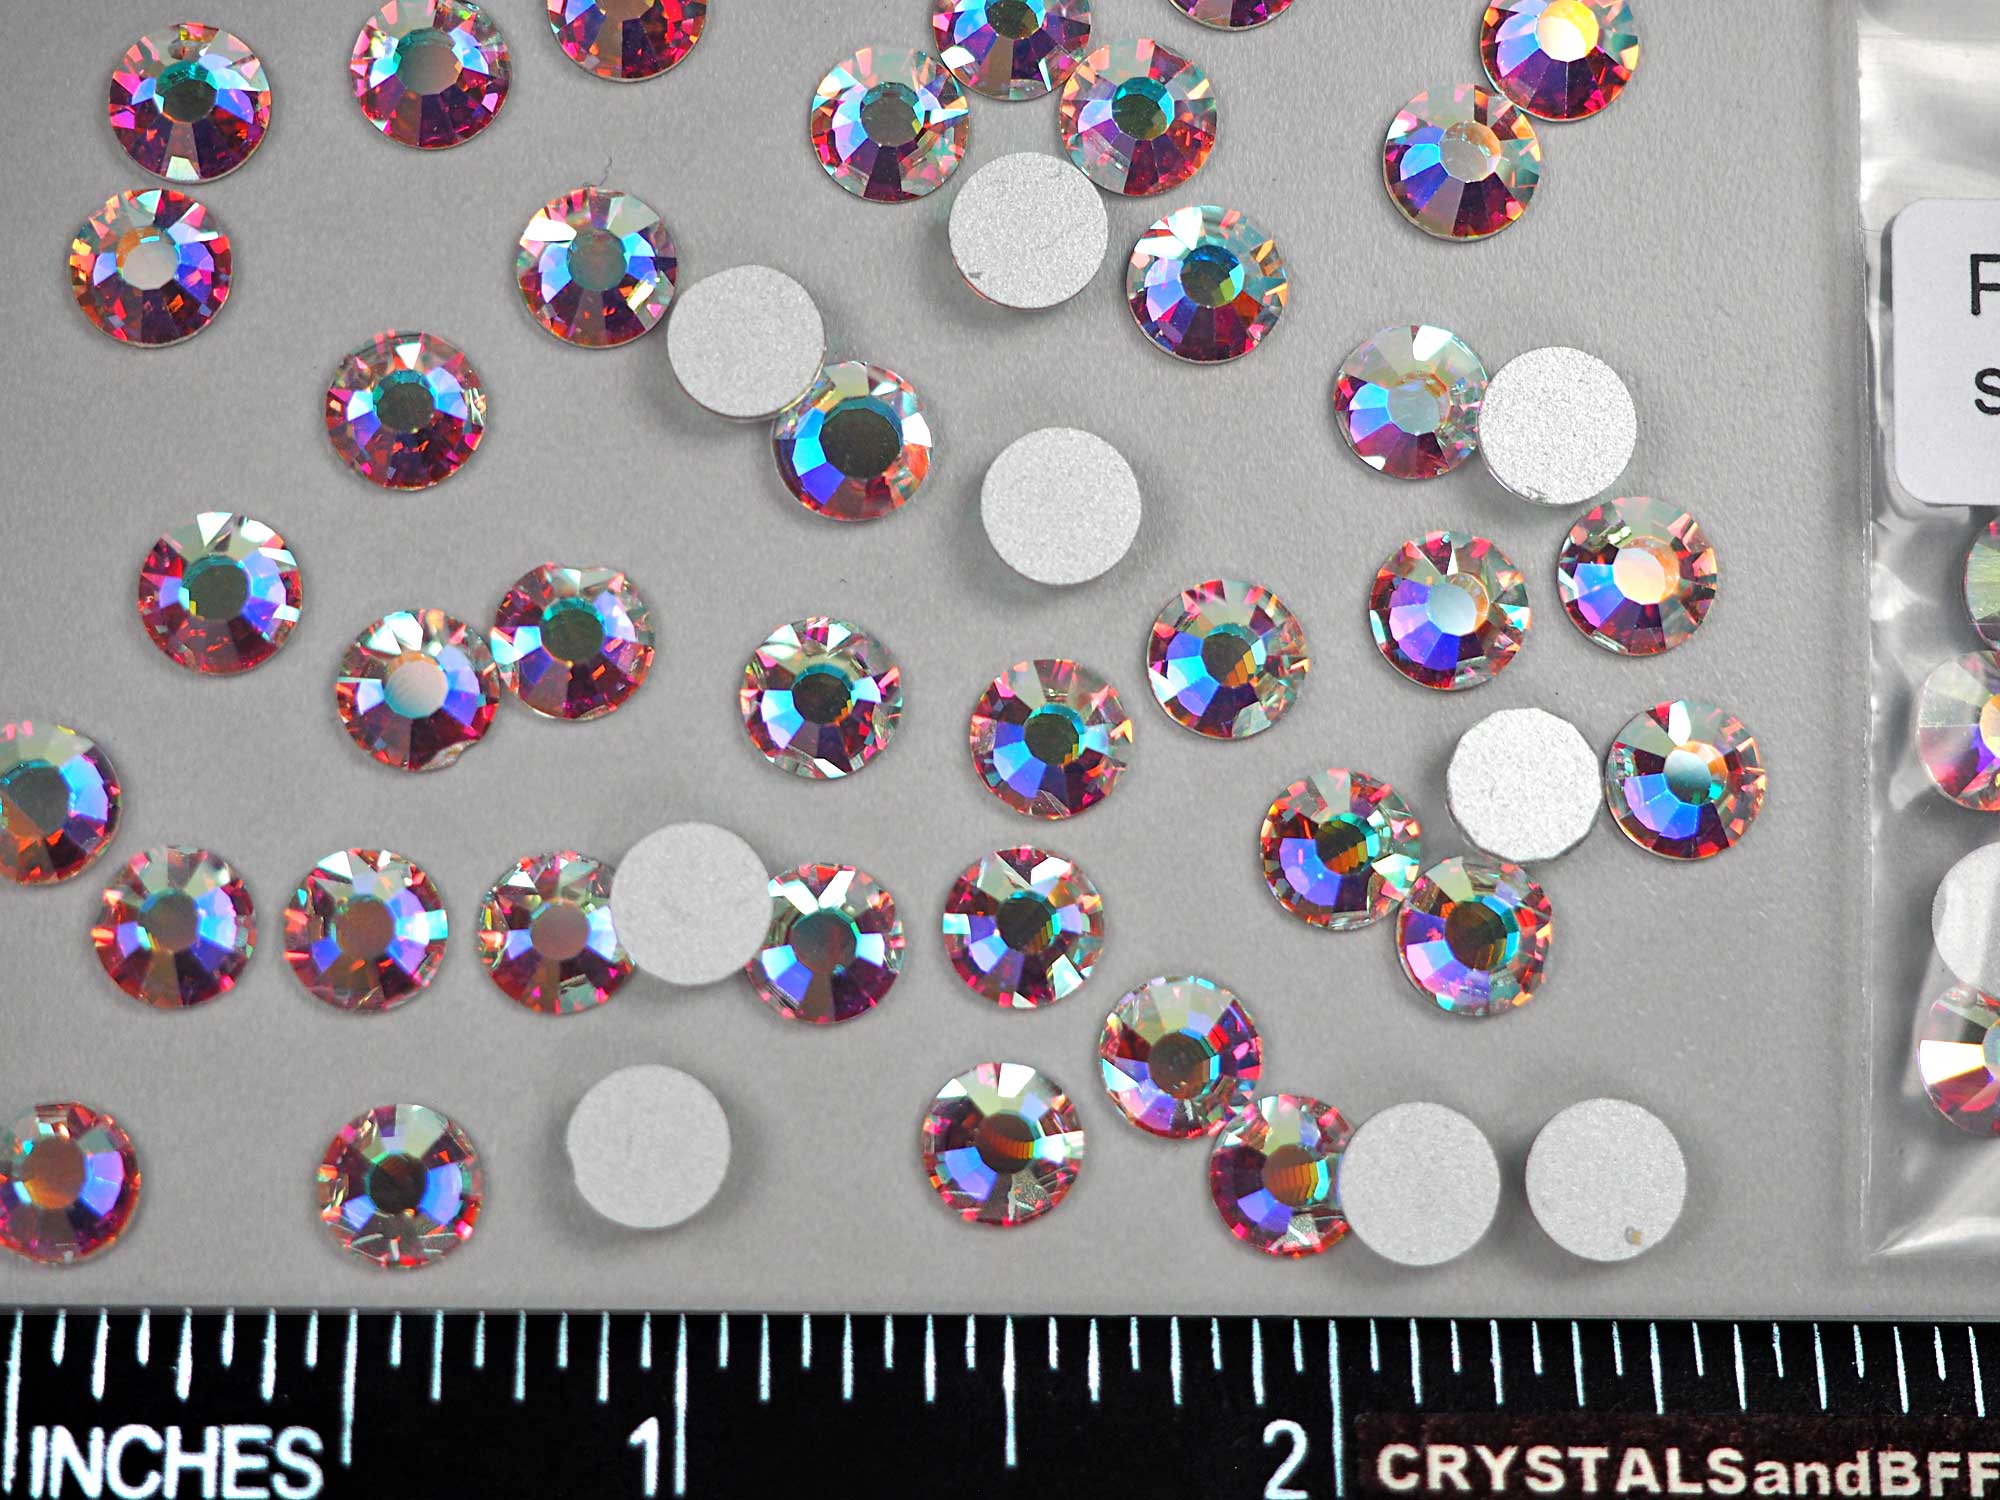 Swarovski Rhinestones for Nail Art Bling Crystal AB - Mixed Sizes Available